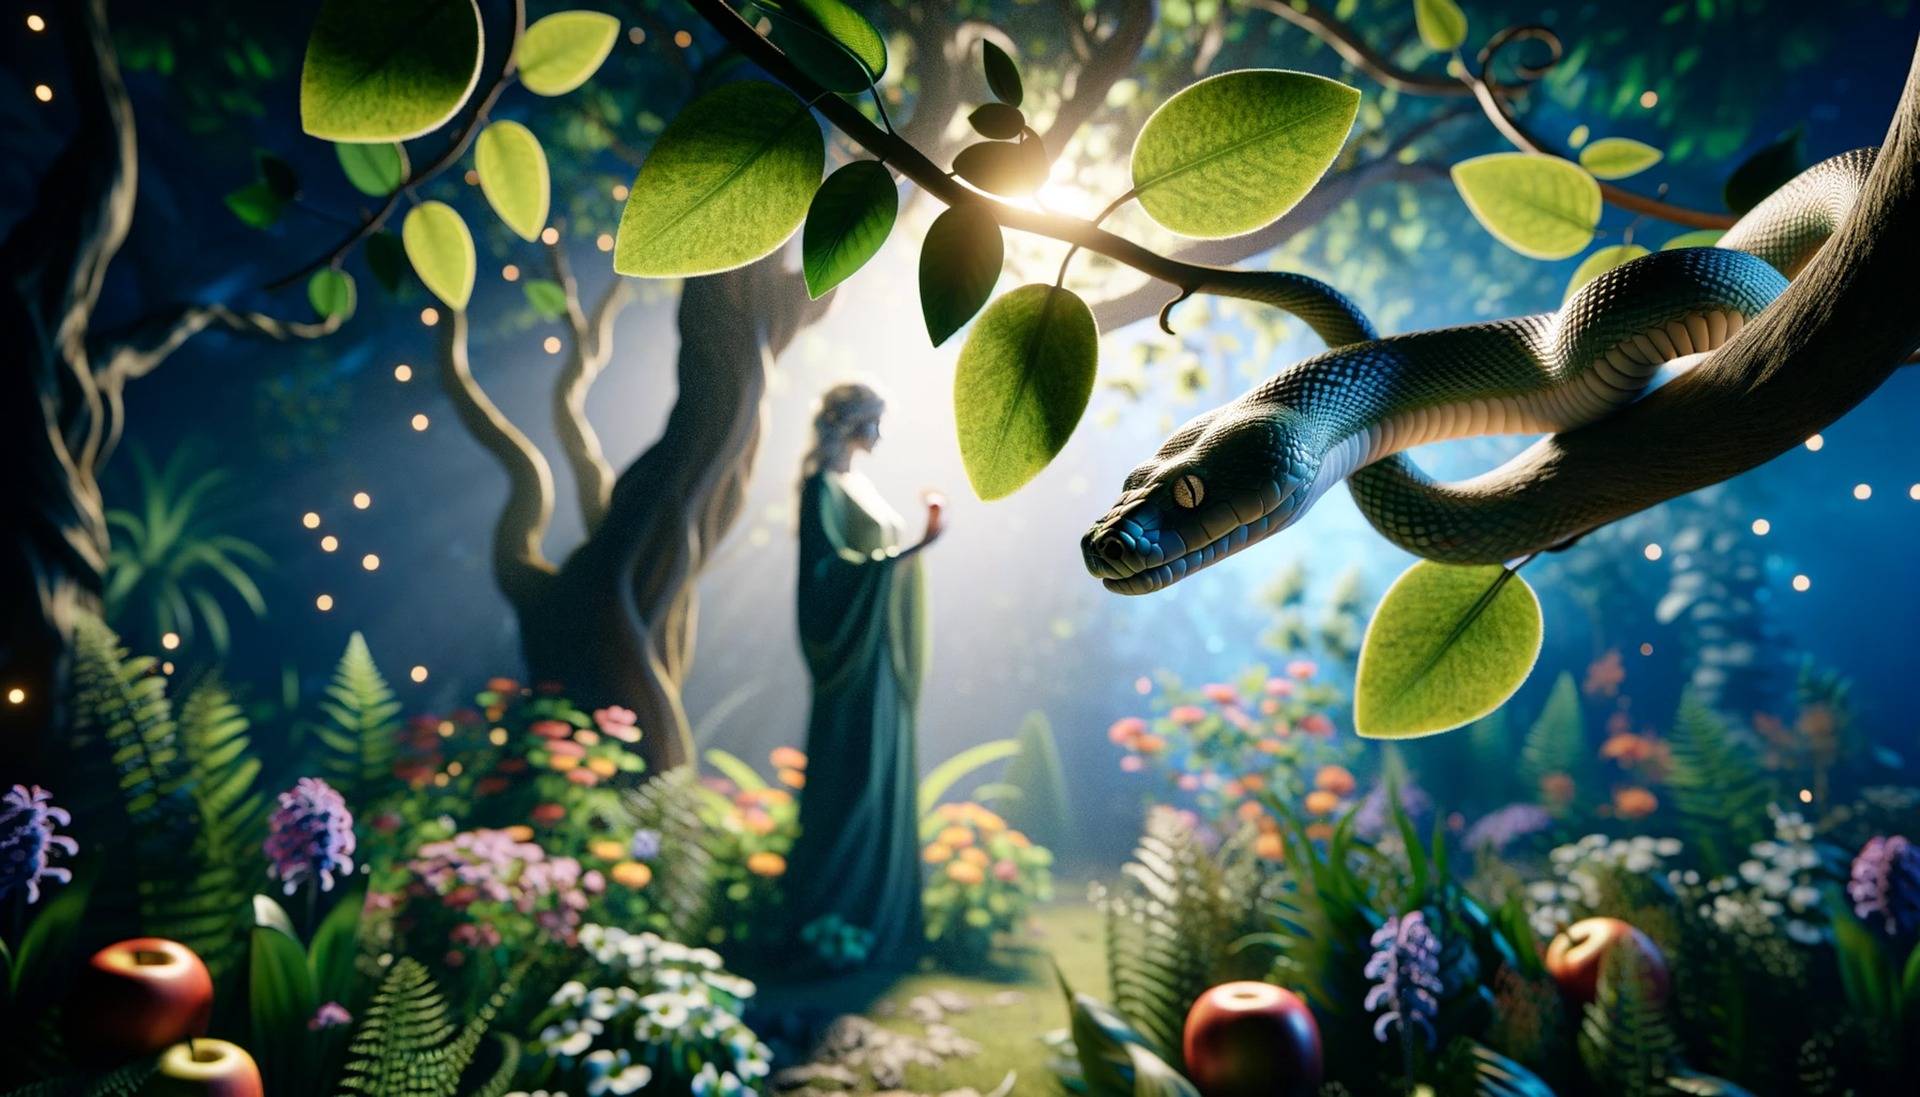 Apple Adam and Eve - fruitegic